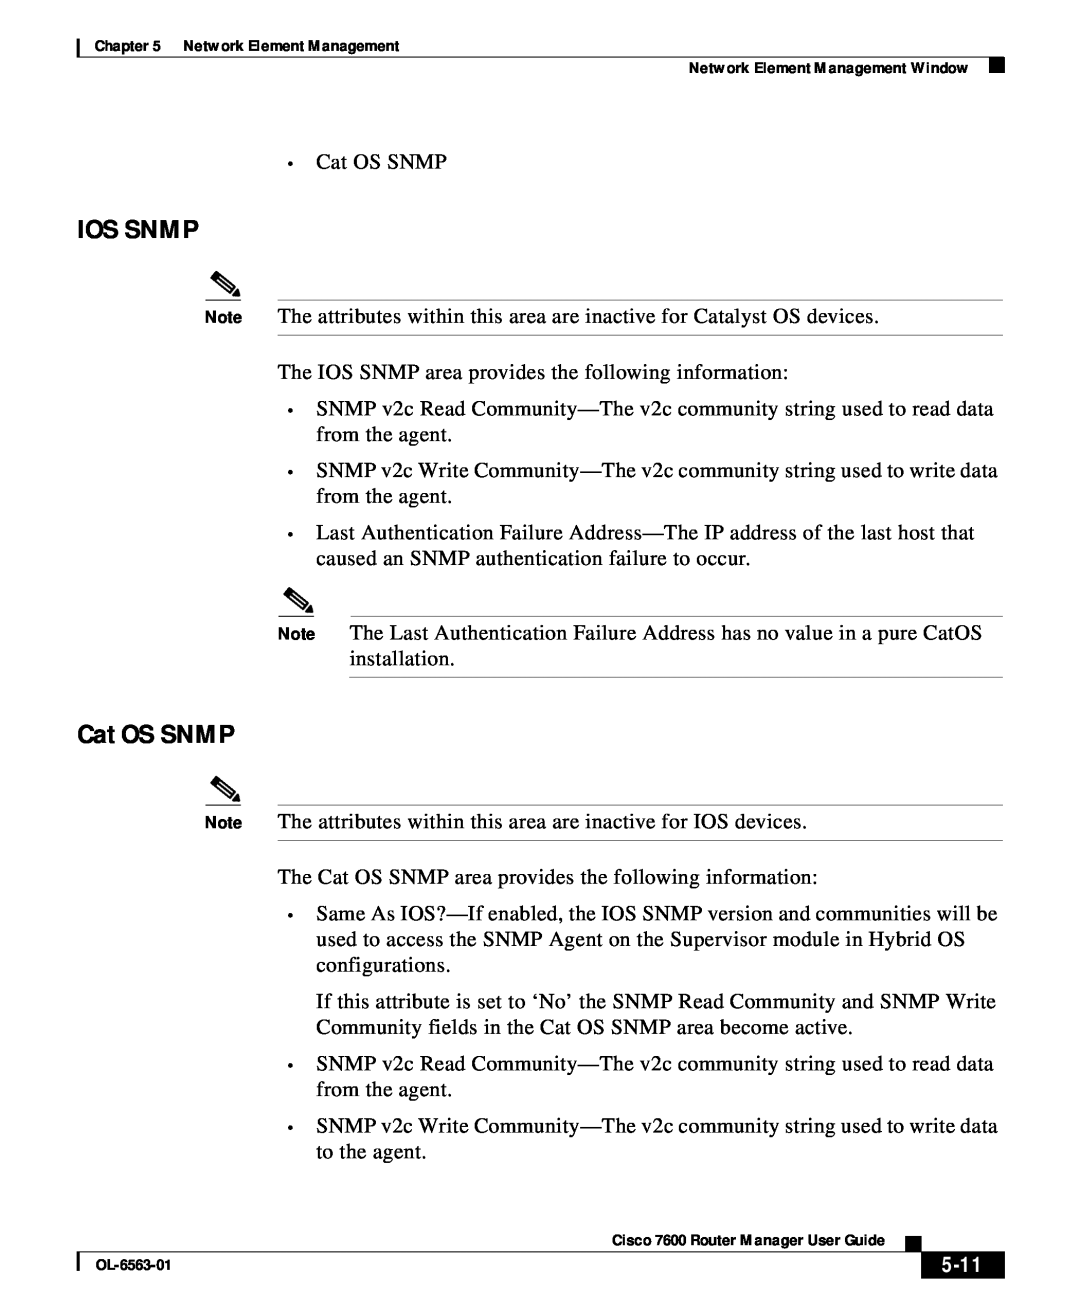 Cisco Systems OL-6563-01 manual Ios Snmp, Cat OS SNMP, 5-11 